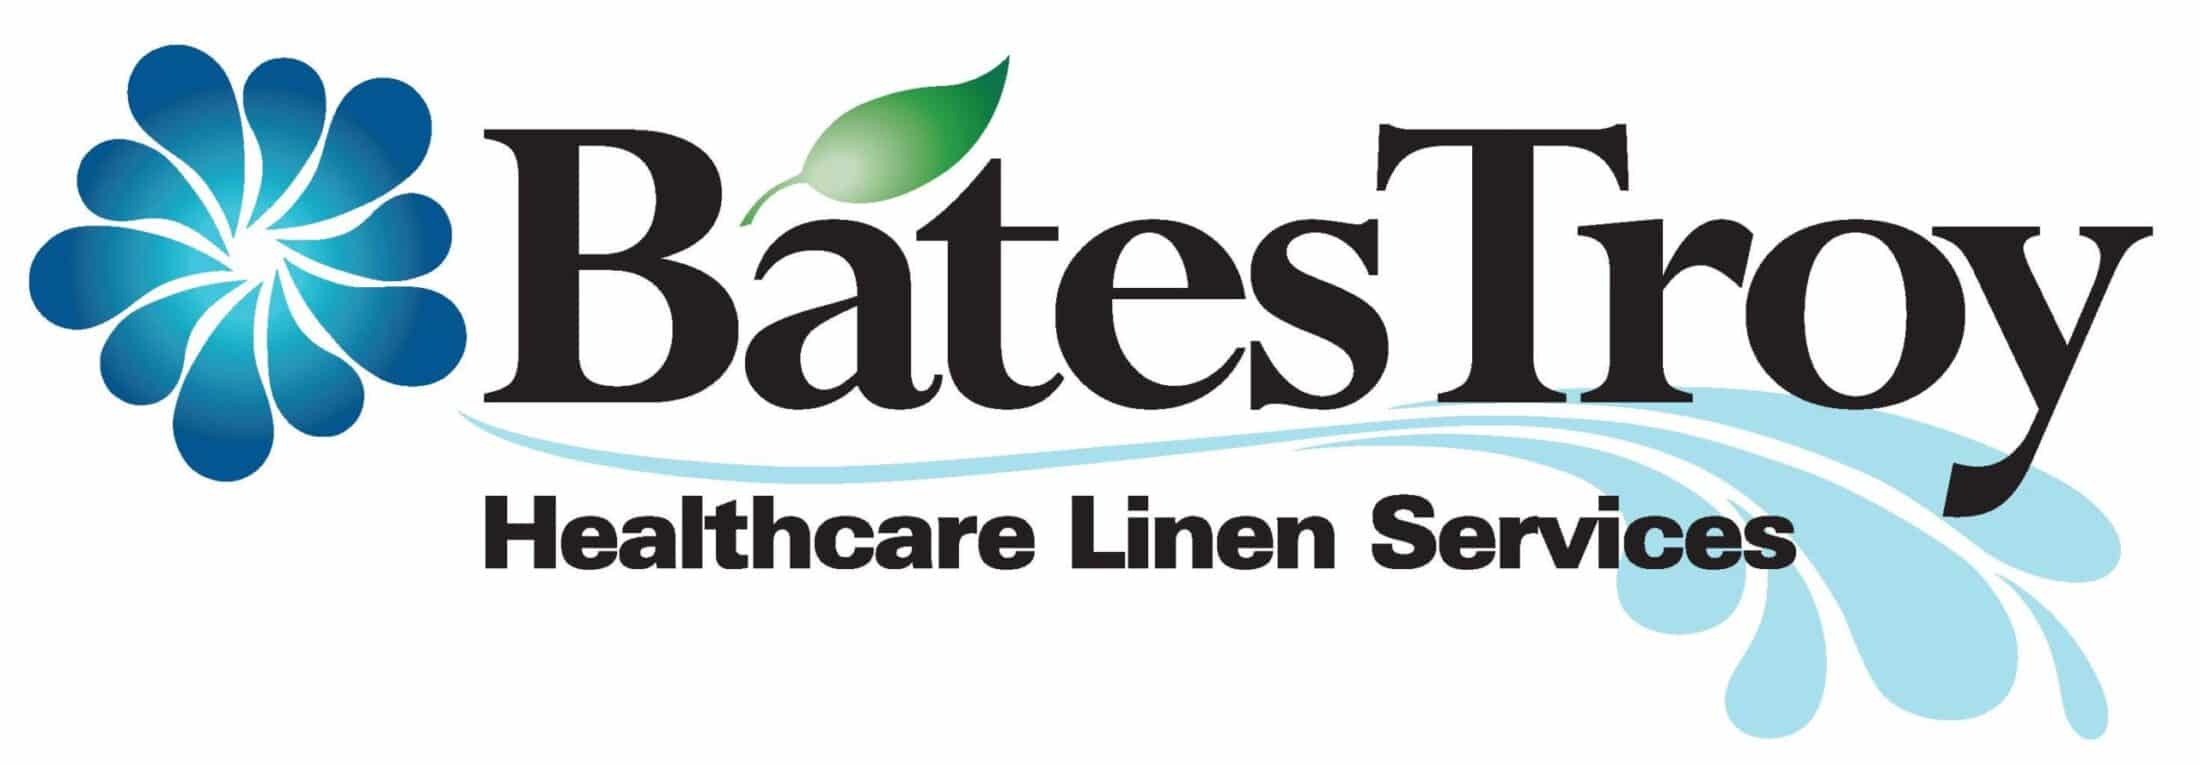 Bates Troy Healthcare Linen